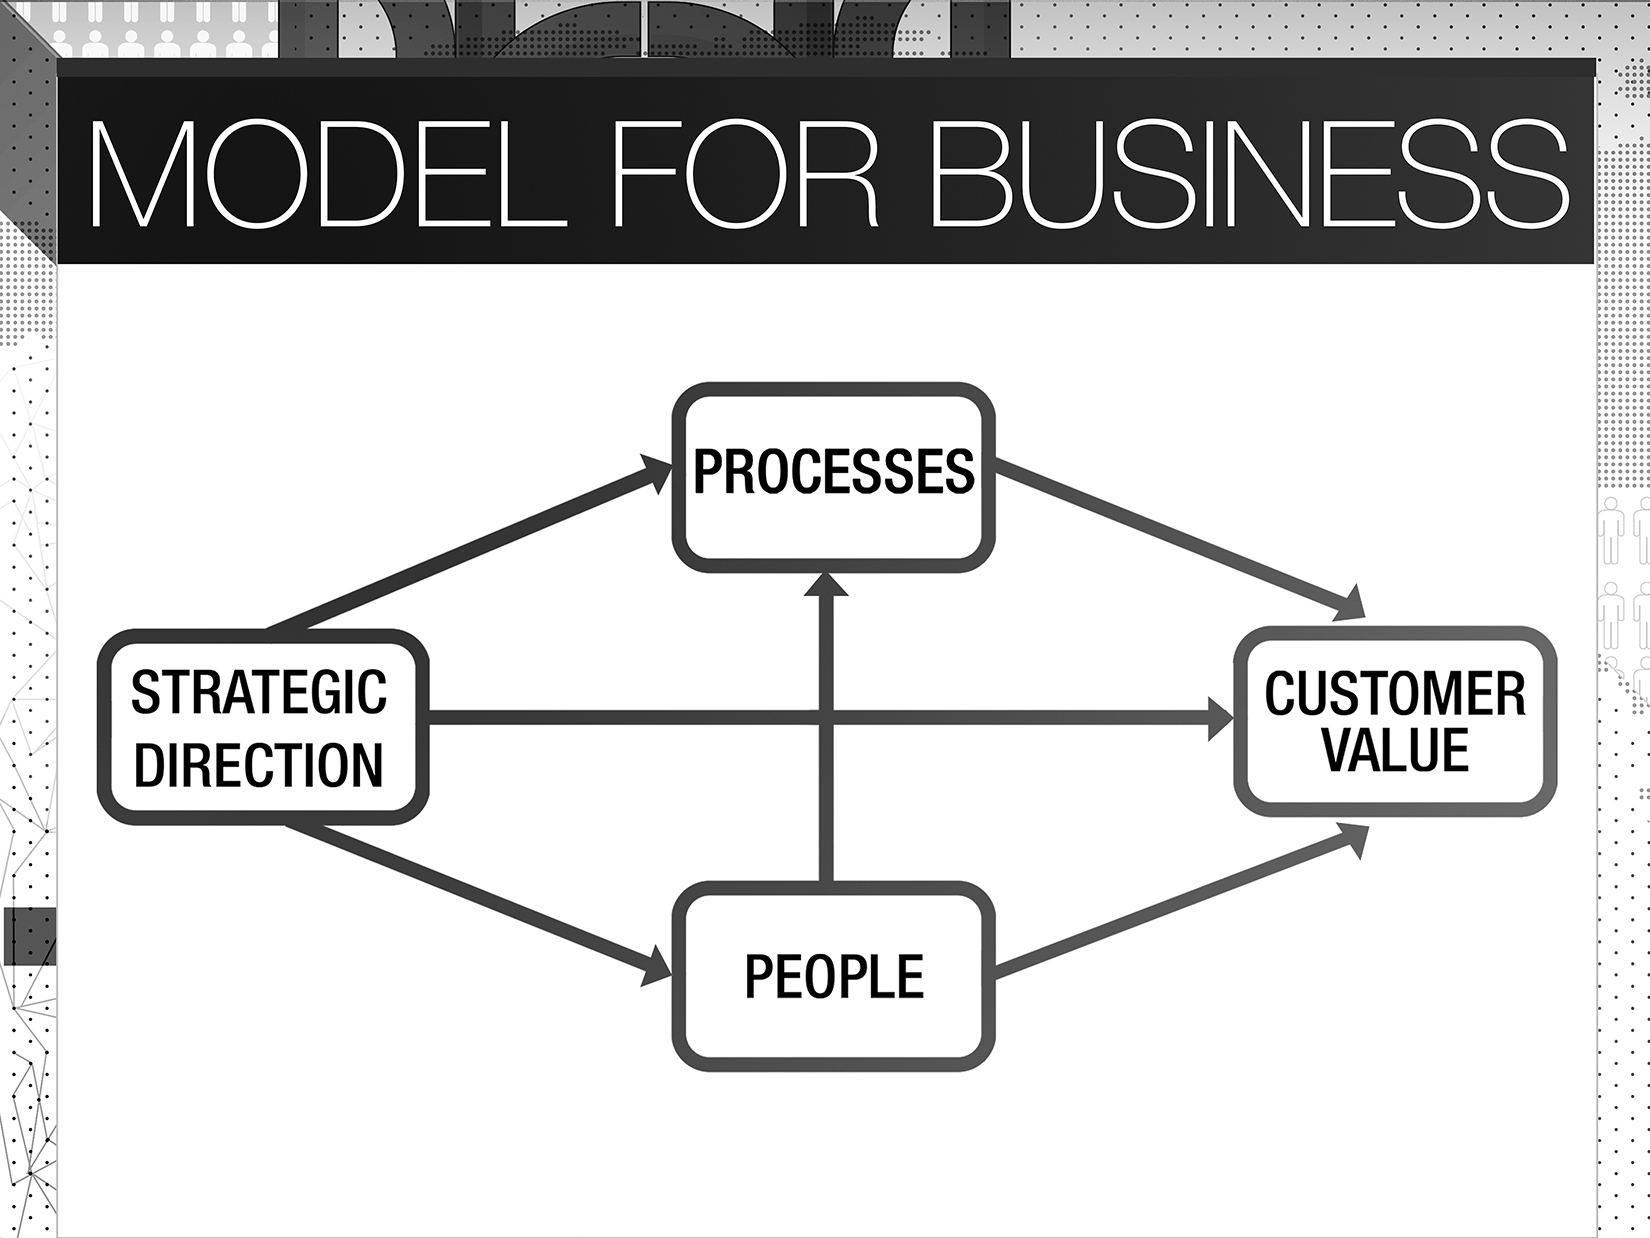 Model for business